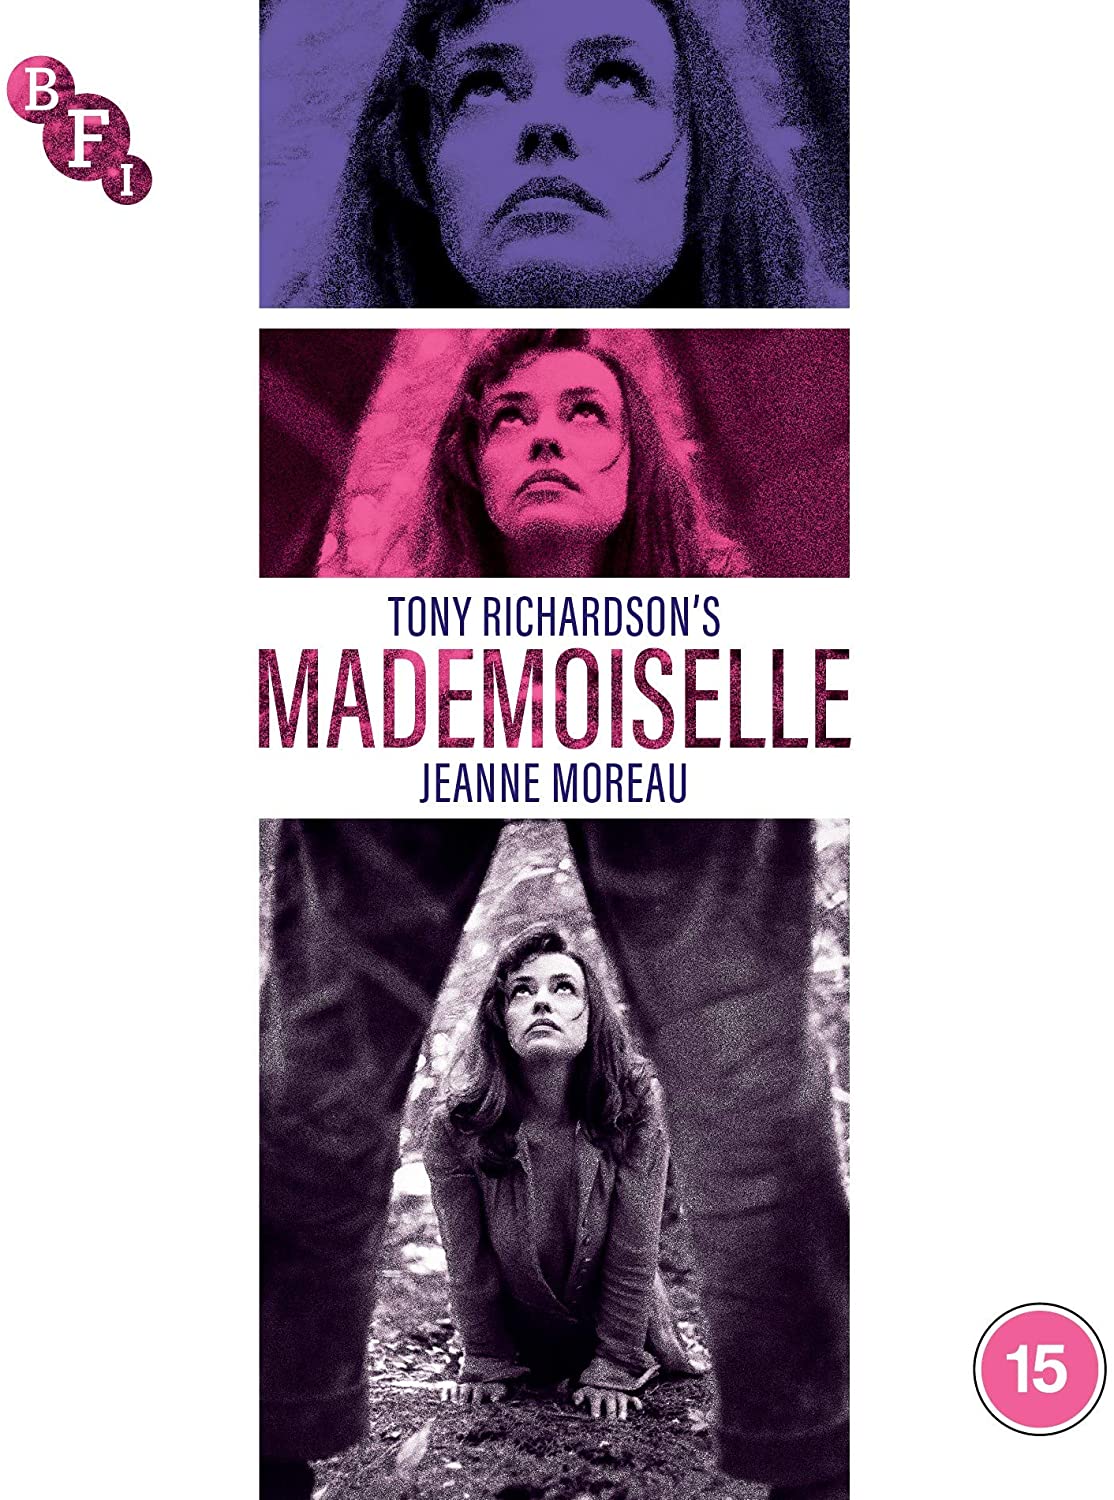 DVD/Blu-ray: Mademoiselle